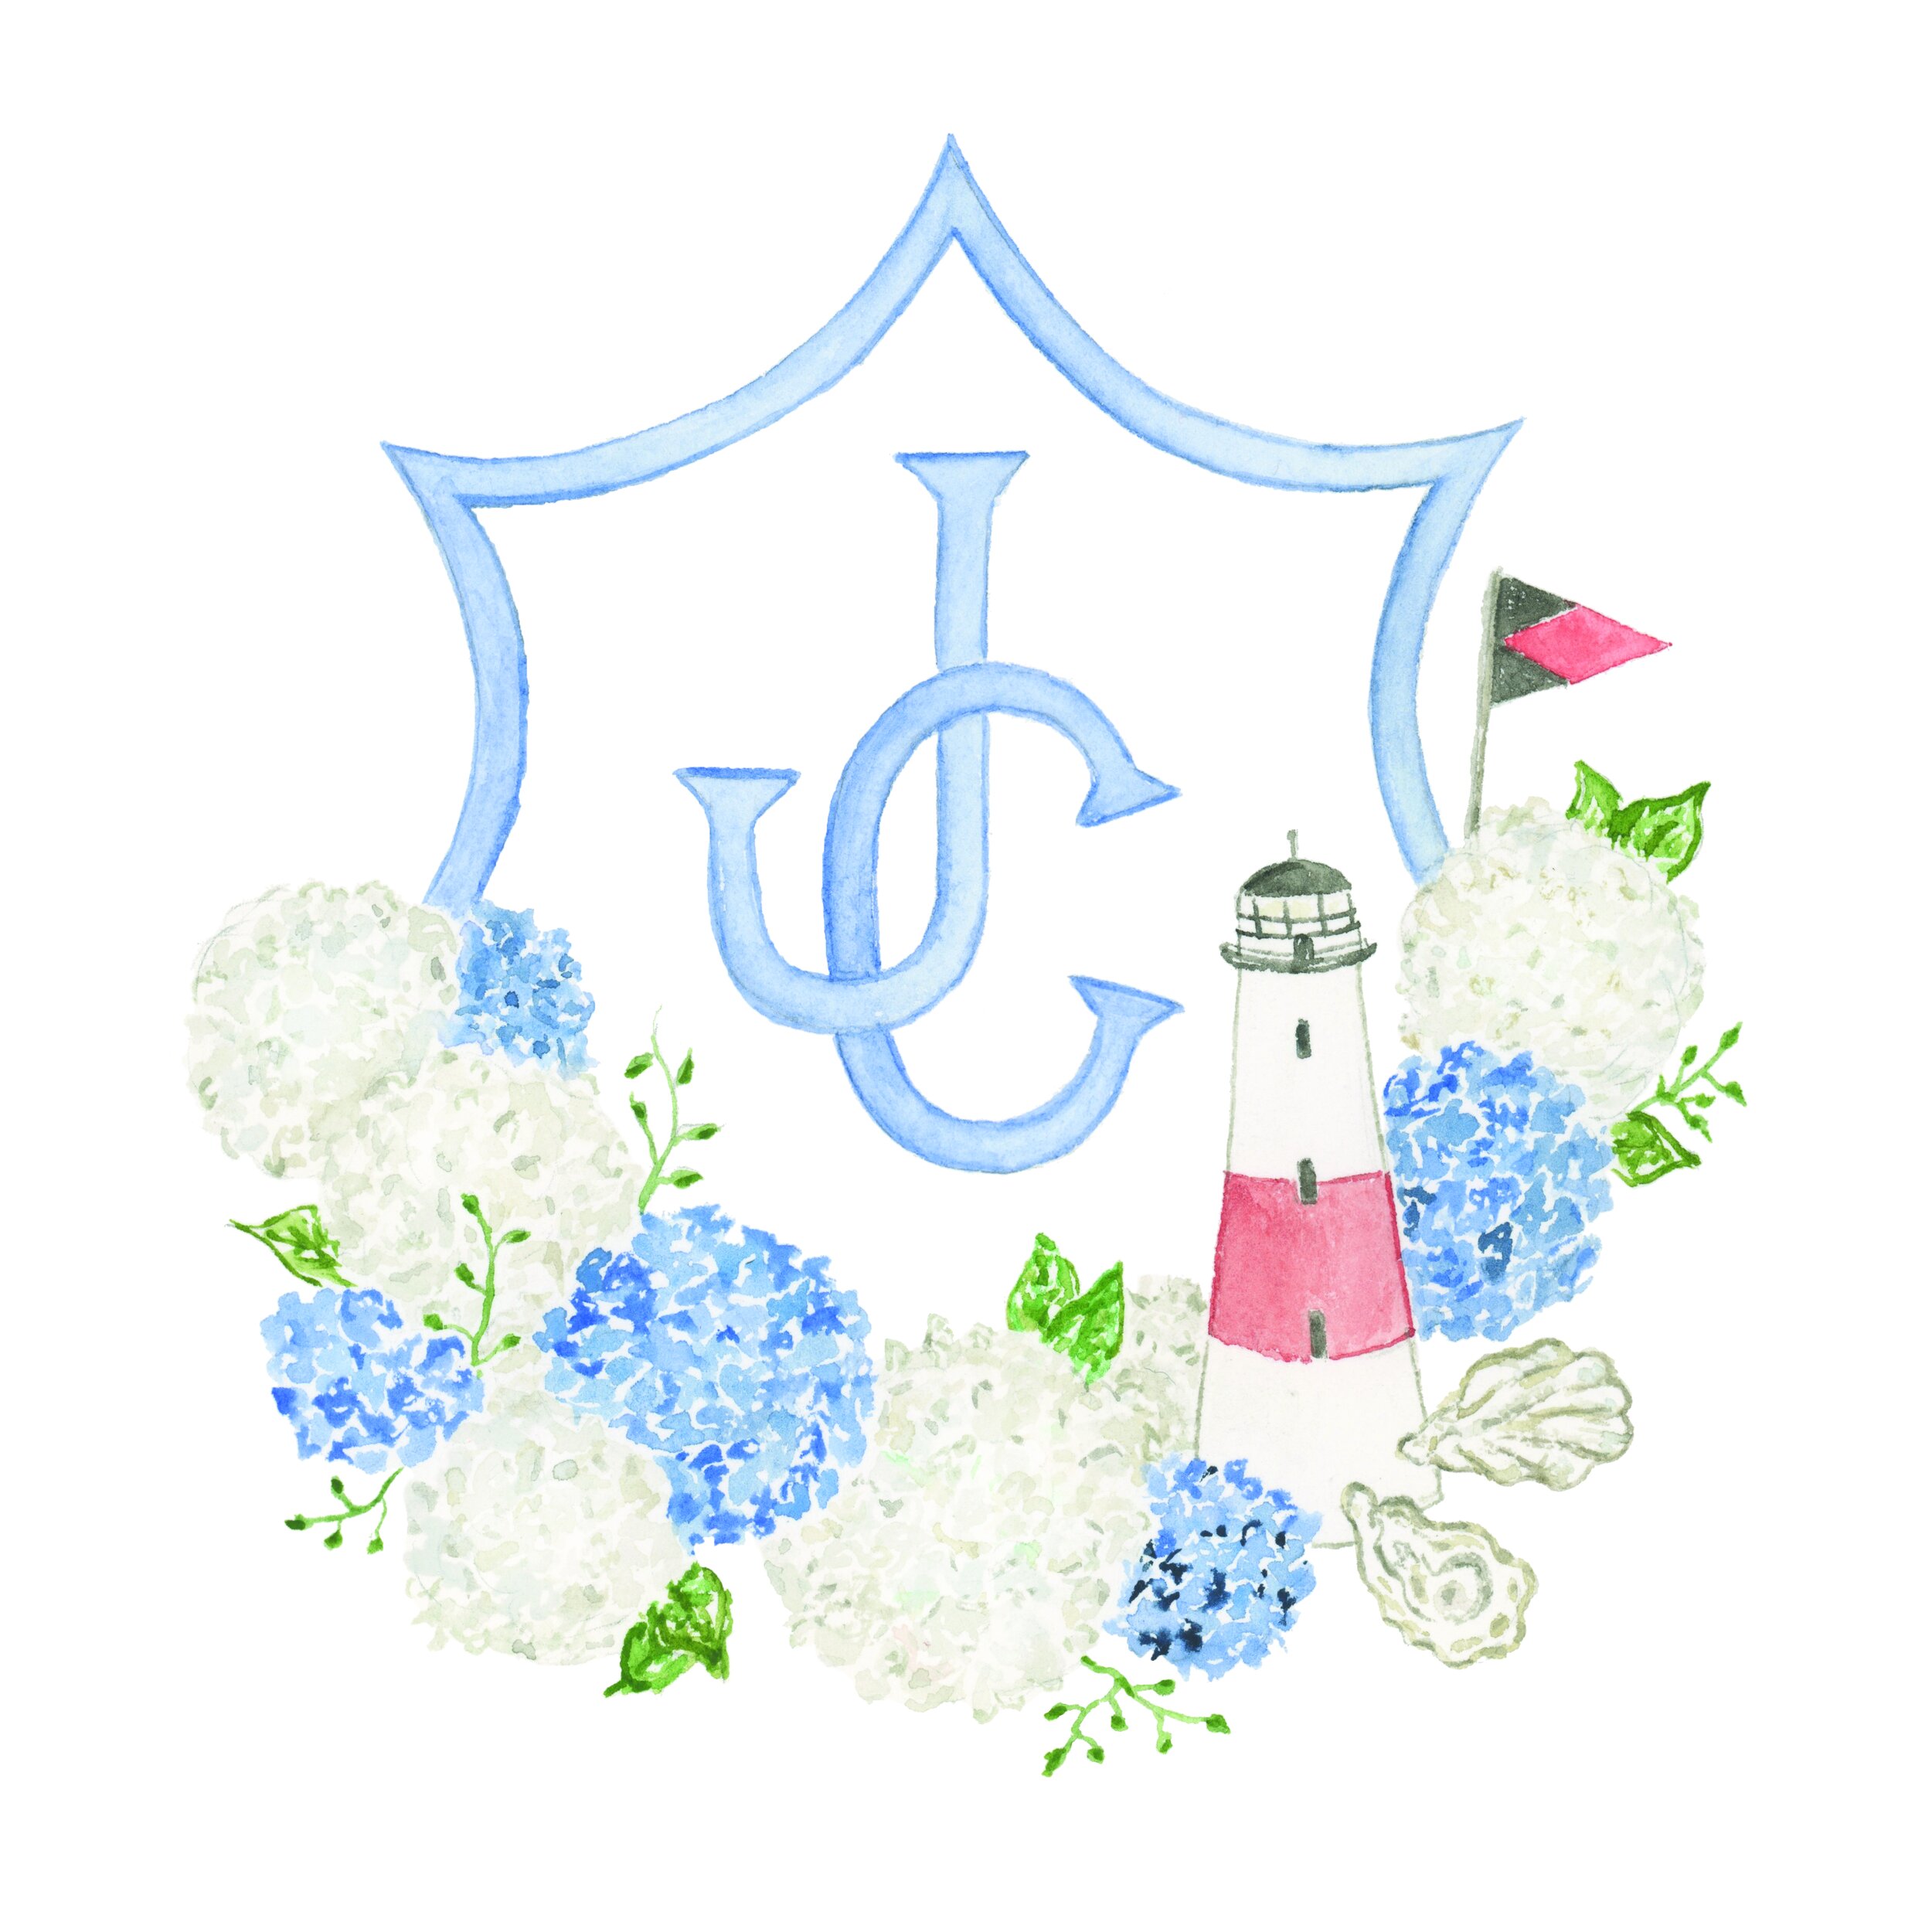 Bespoke wedding emblem 